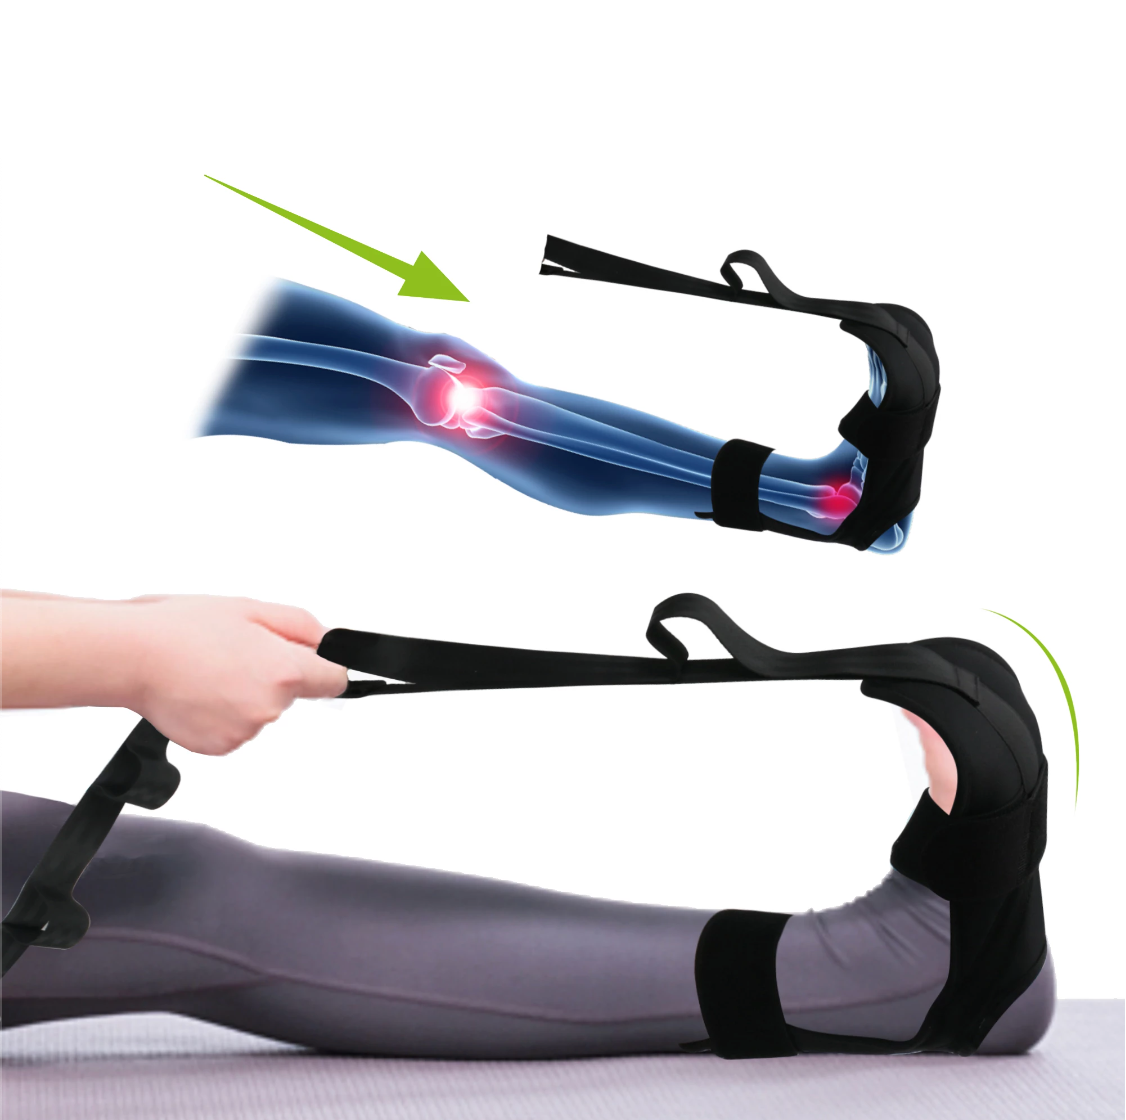 Yoga Flex Strap – The OrthoFit - Premium Orthopedic Footwear